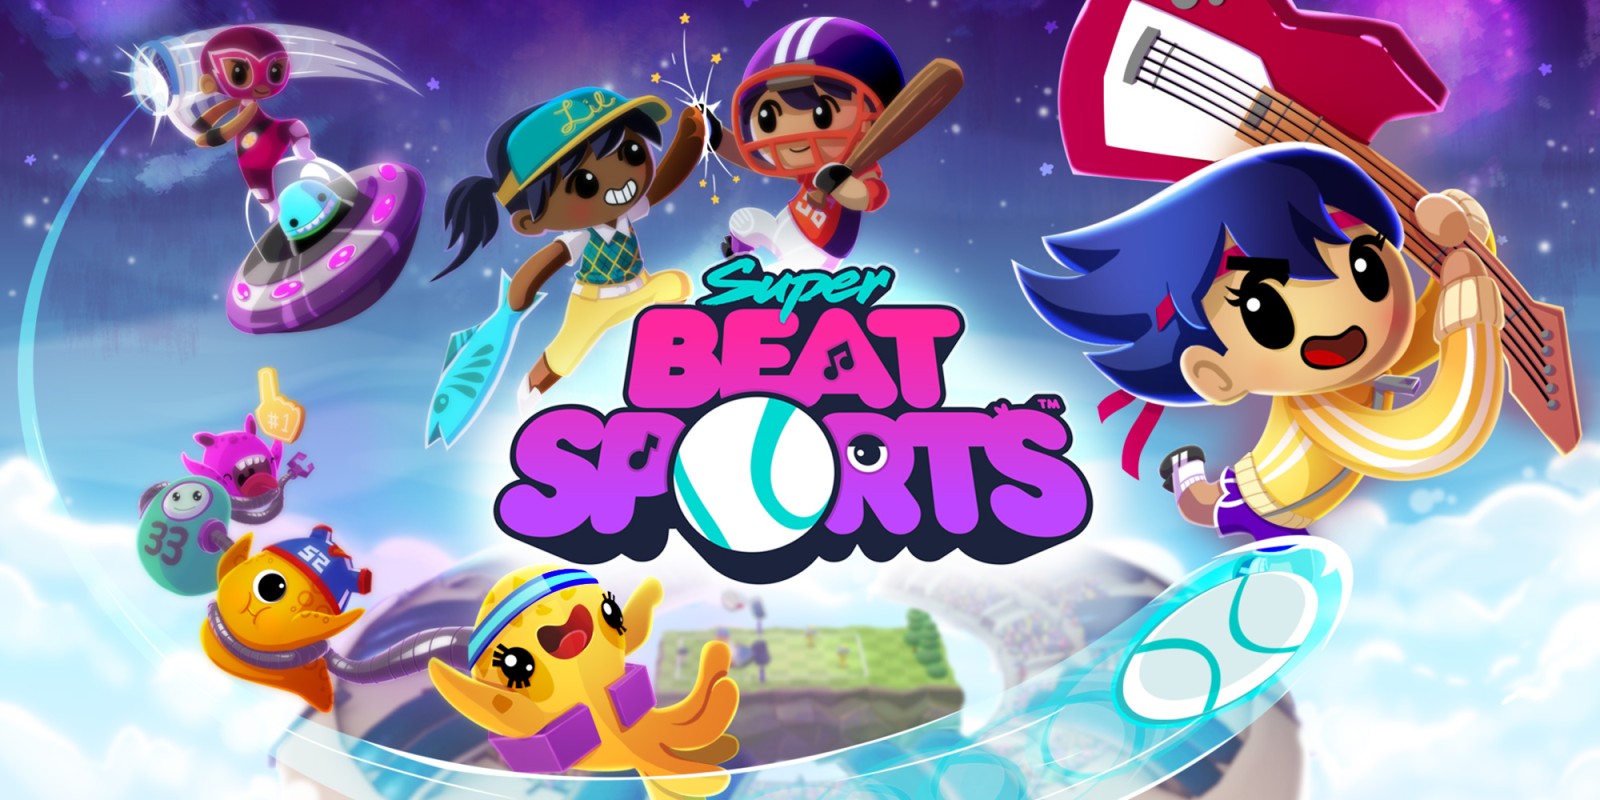 Super Beat Sports™